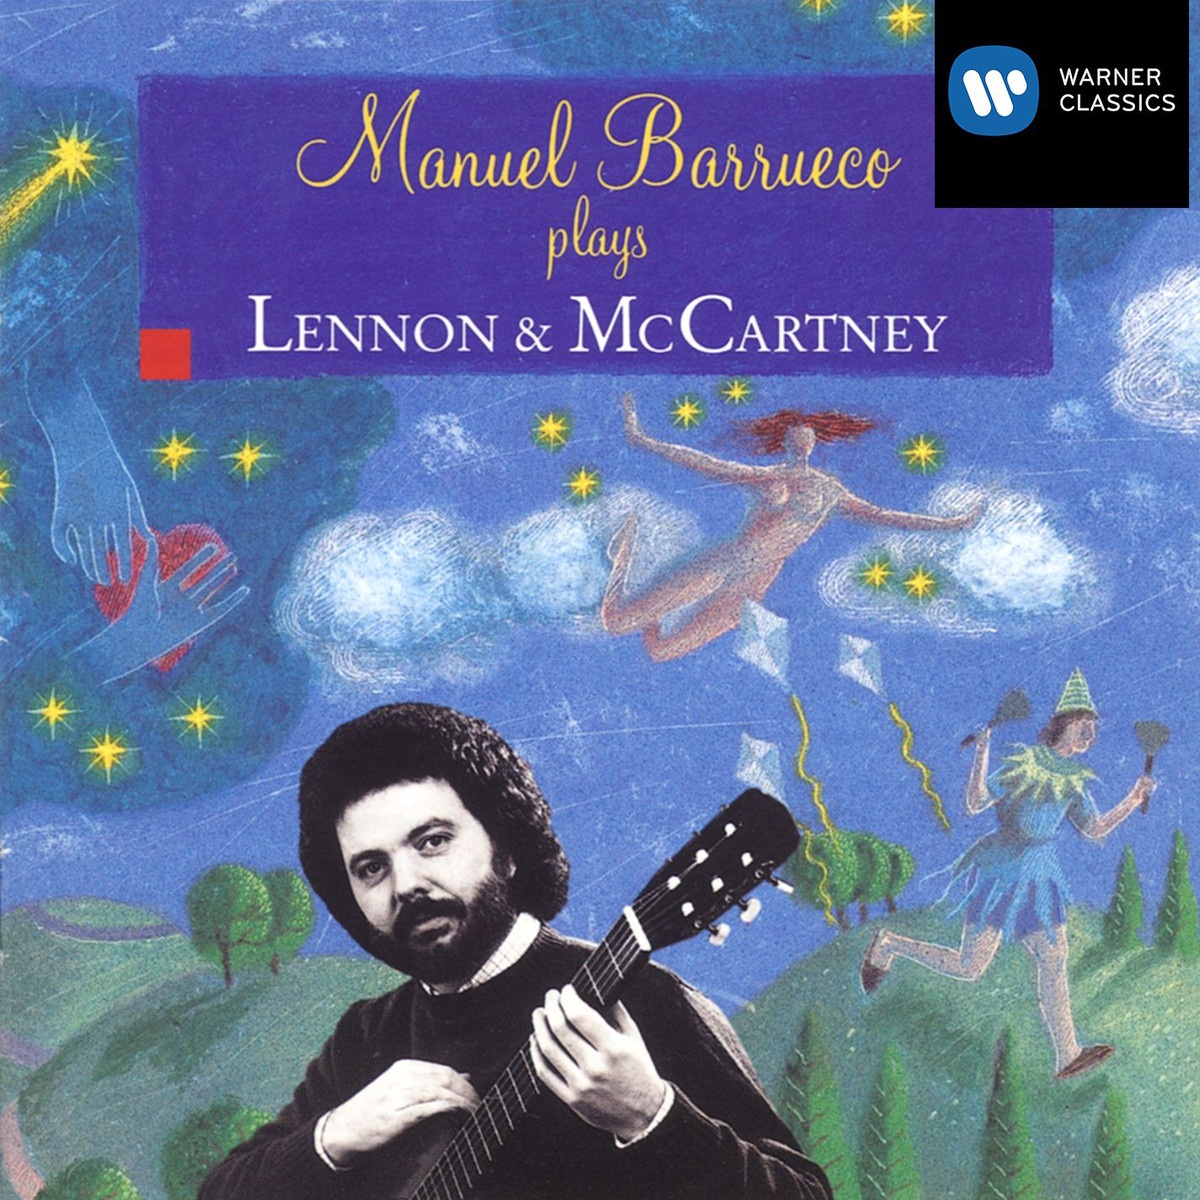 Manual Barrueco plays Lennon & McCartney